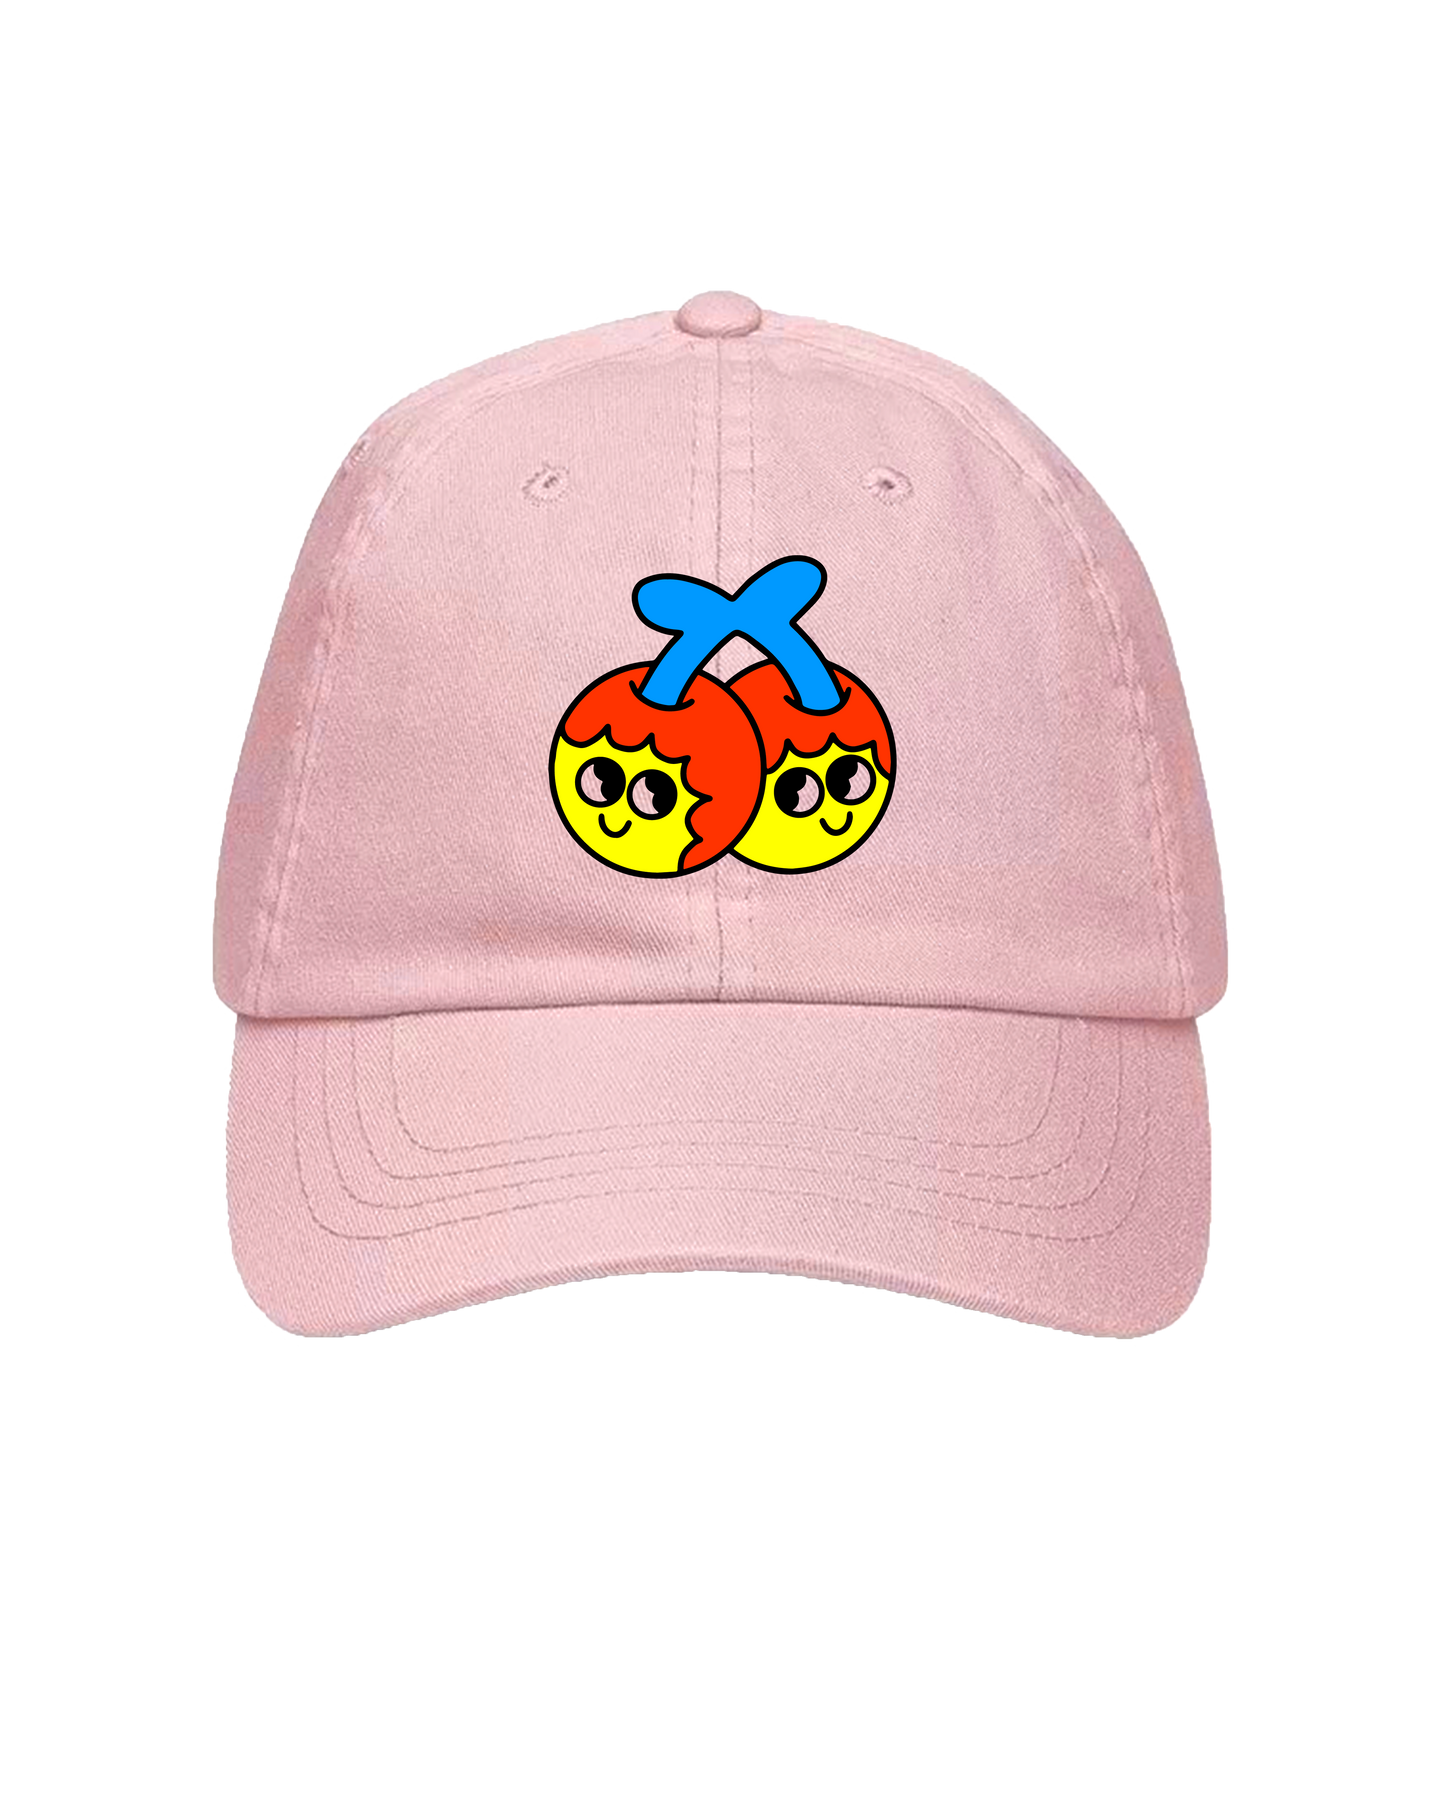 Cherries light pink Cap by FS x BURGER BABIE